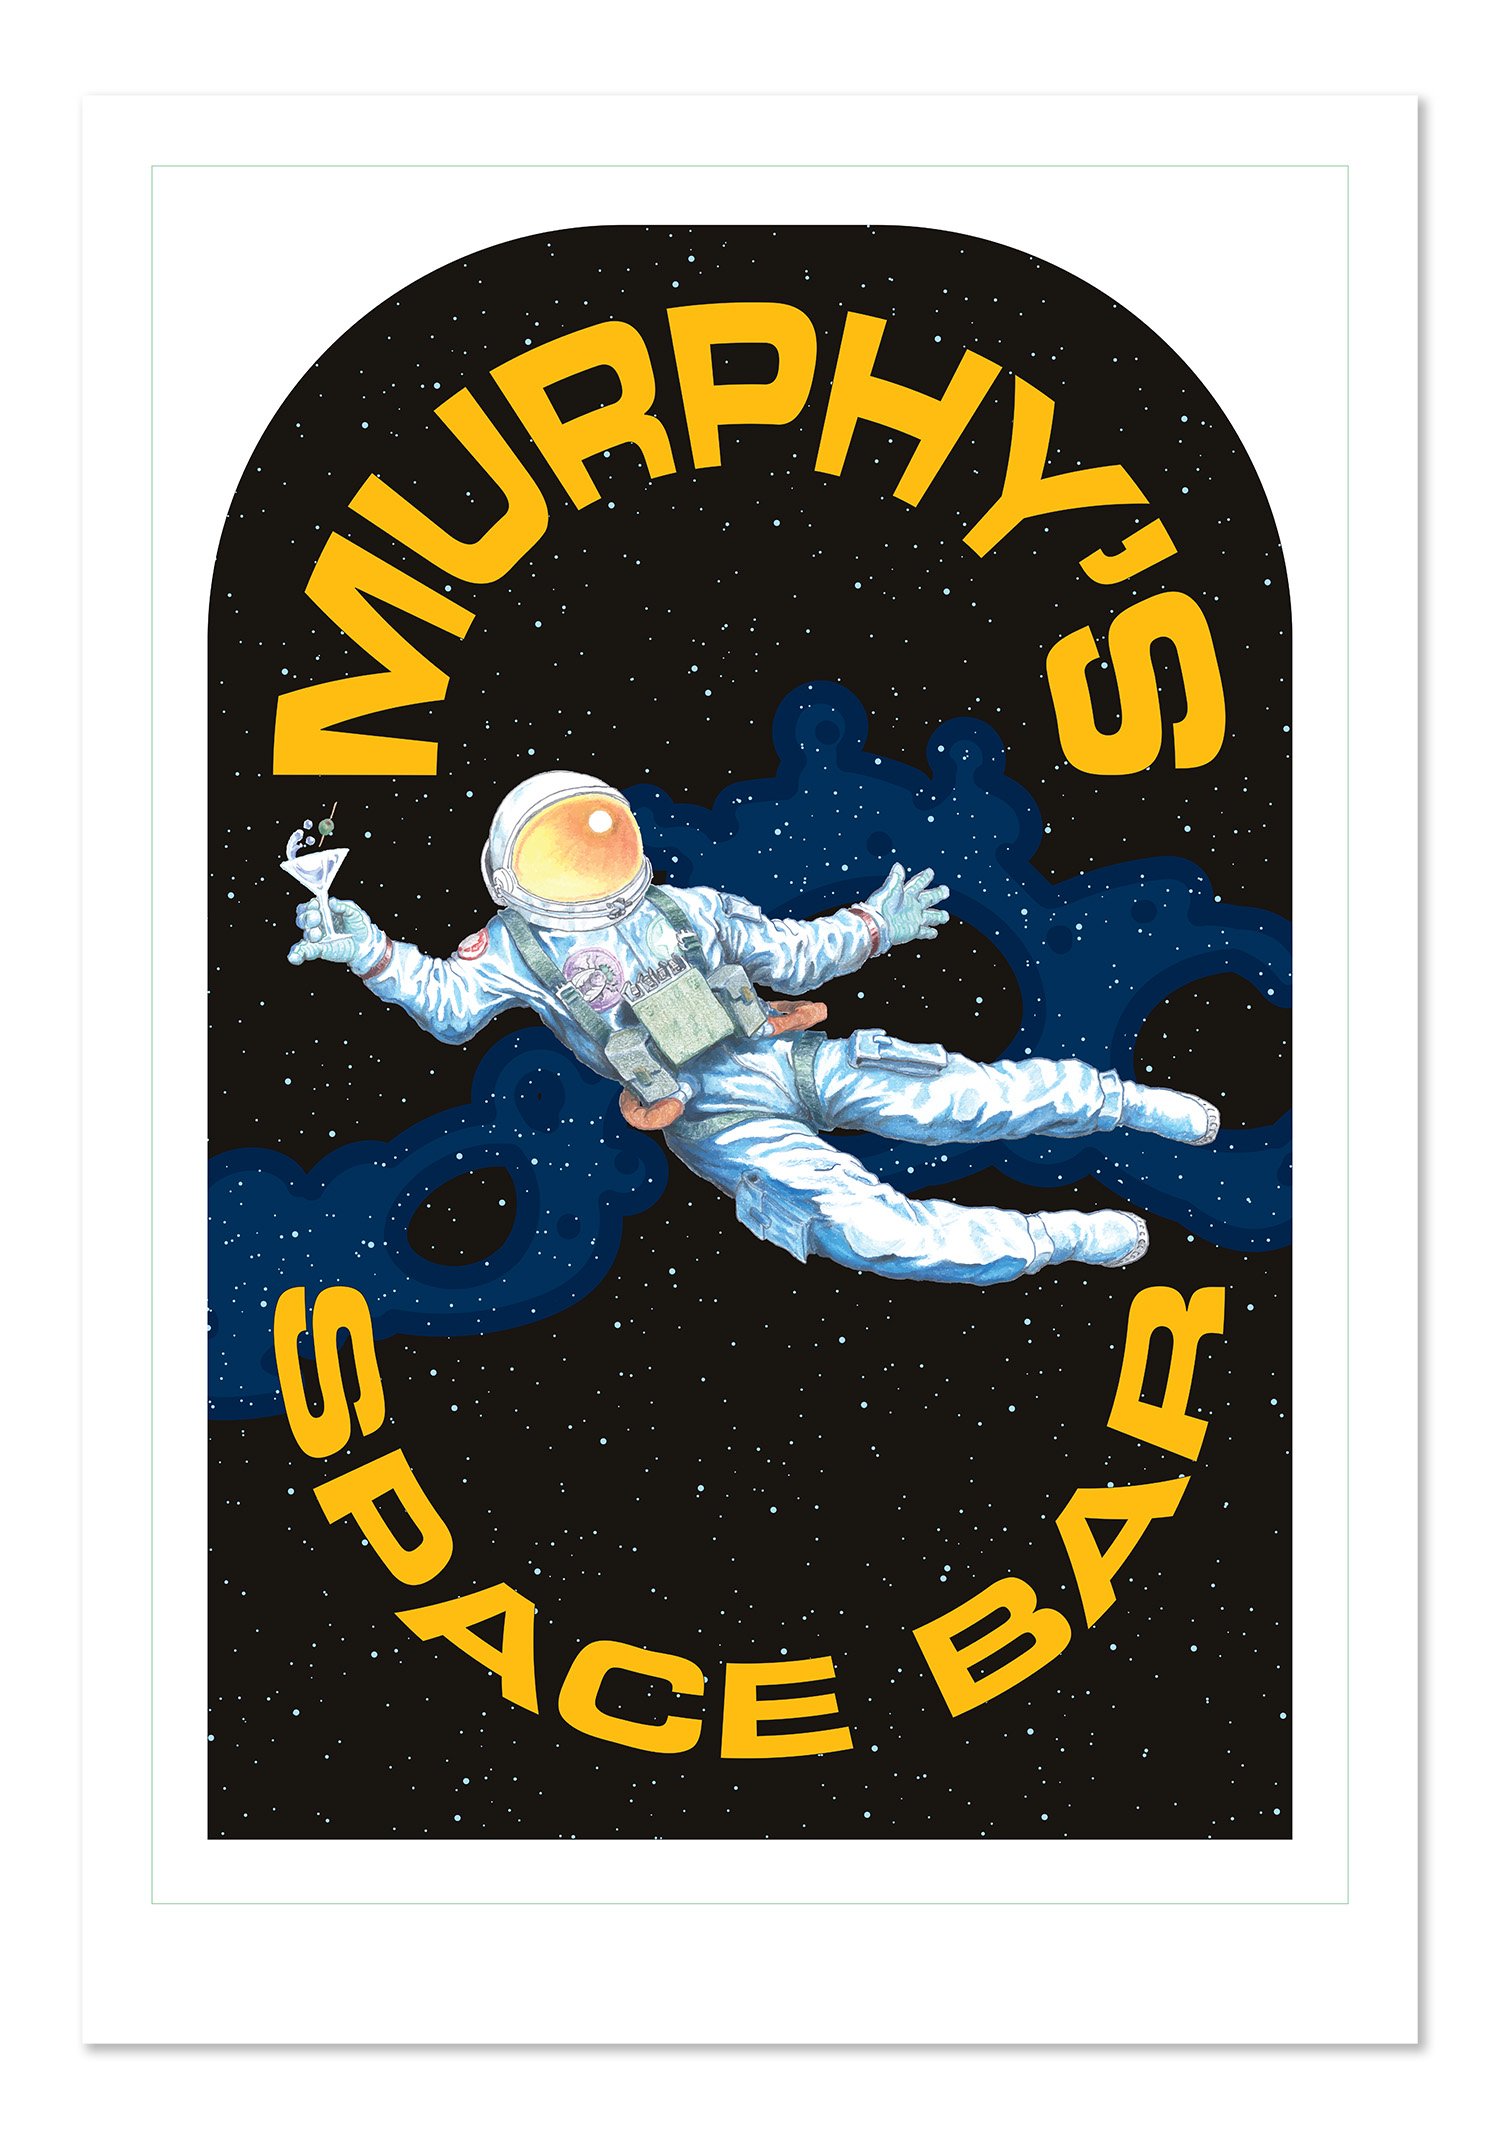 Murphy's Space Bar